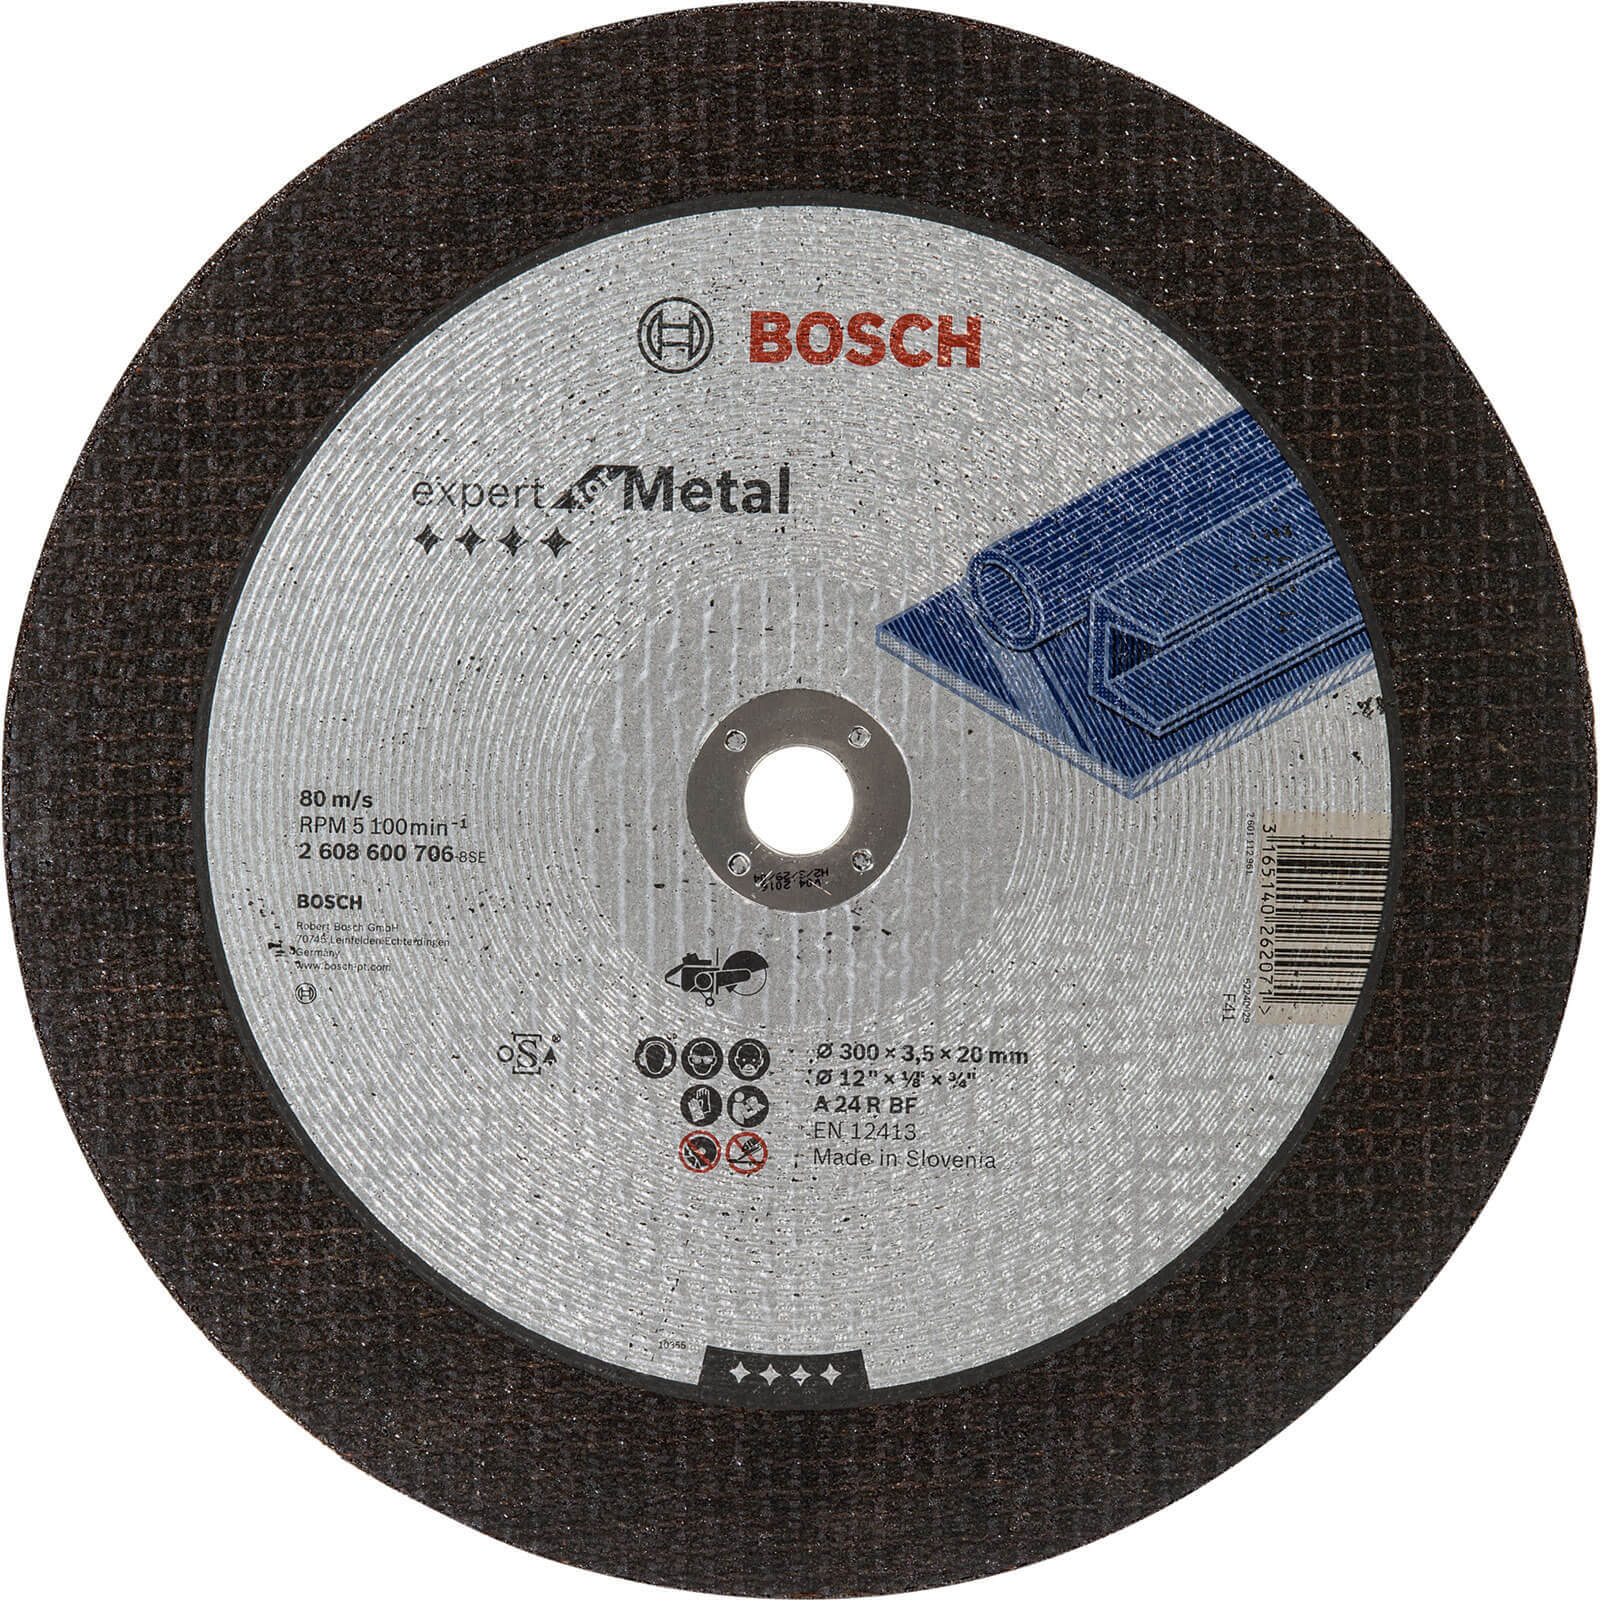 Photo of Bosch A24r Bf Flat Metal Cutting Disc 300mm For Petrol Cut Saws 300mm